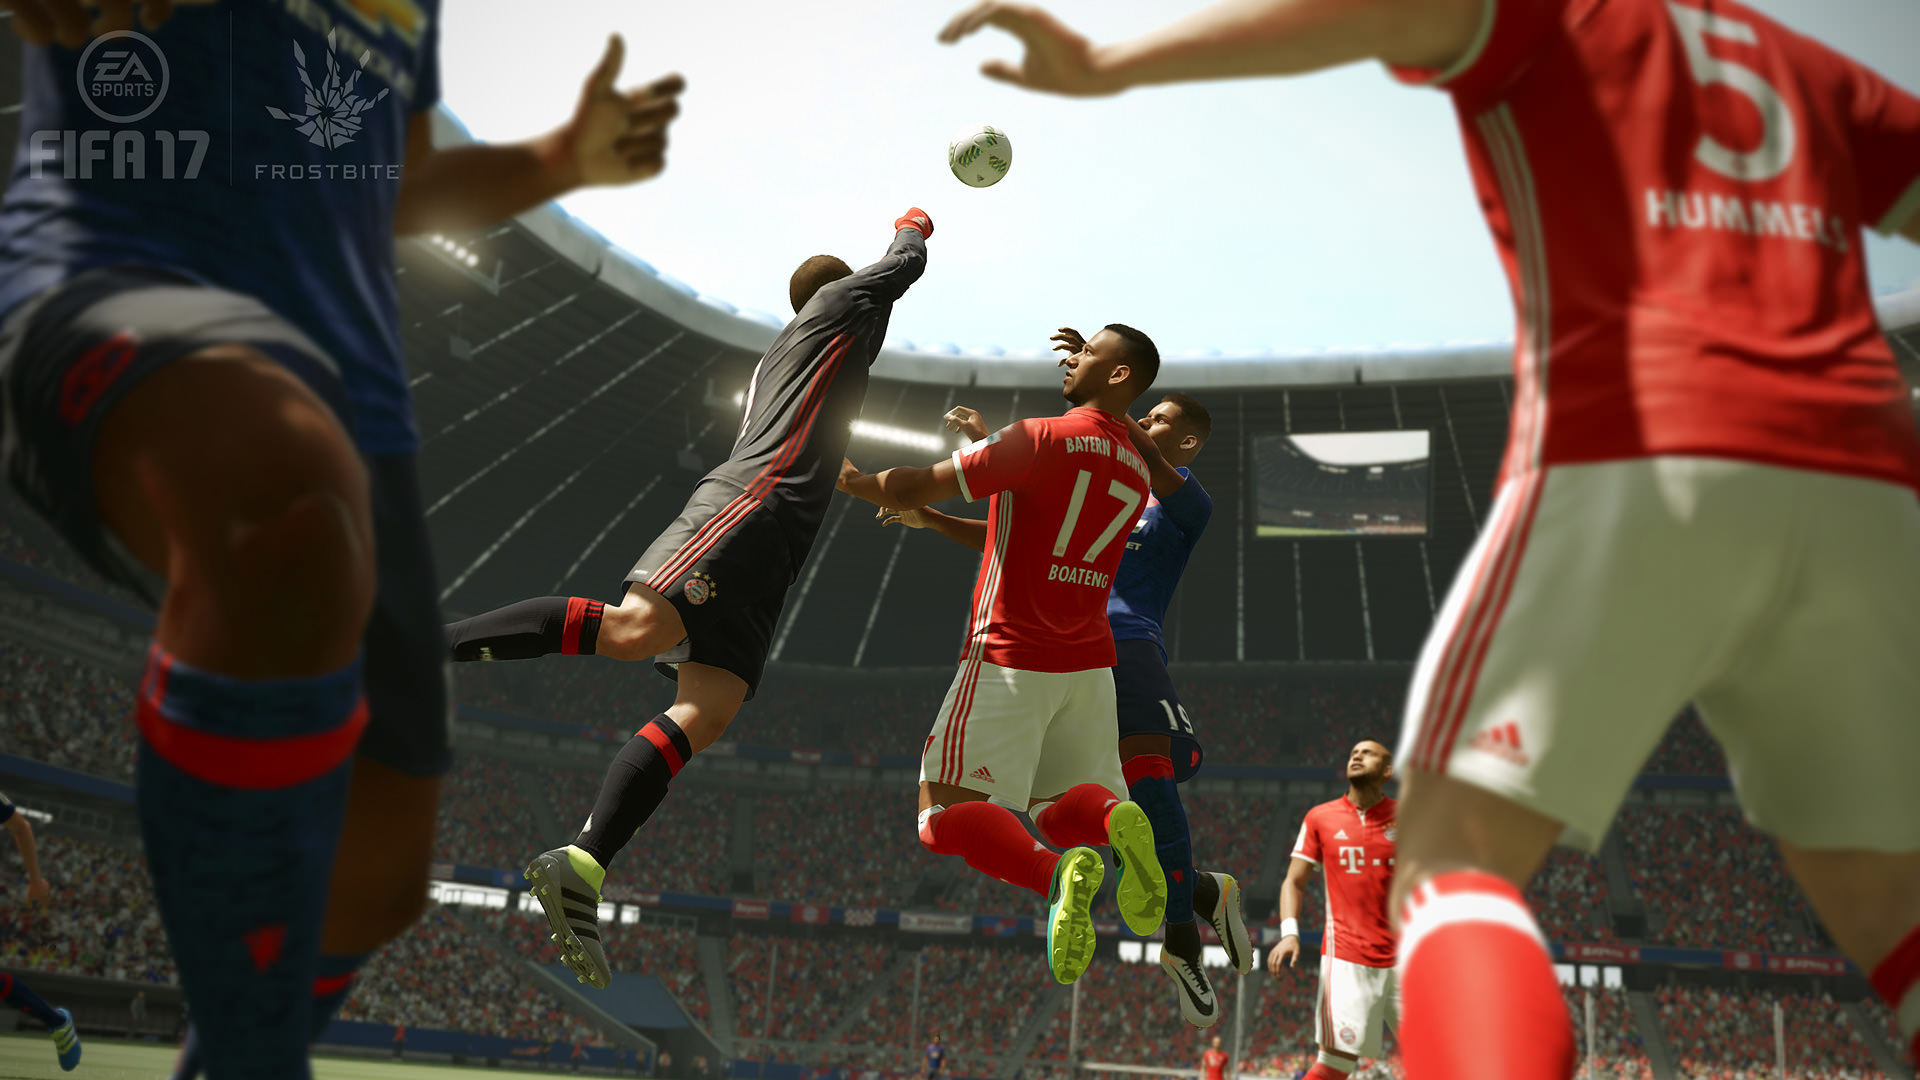 FIFA 17 – EA Partnership with FC Bayern Munich